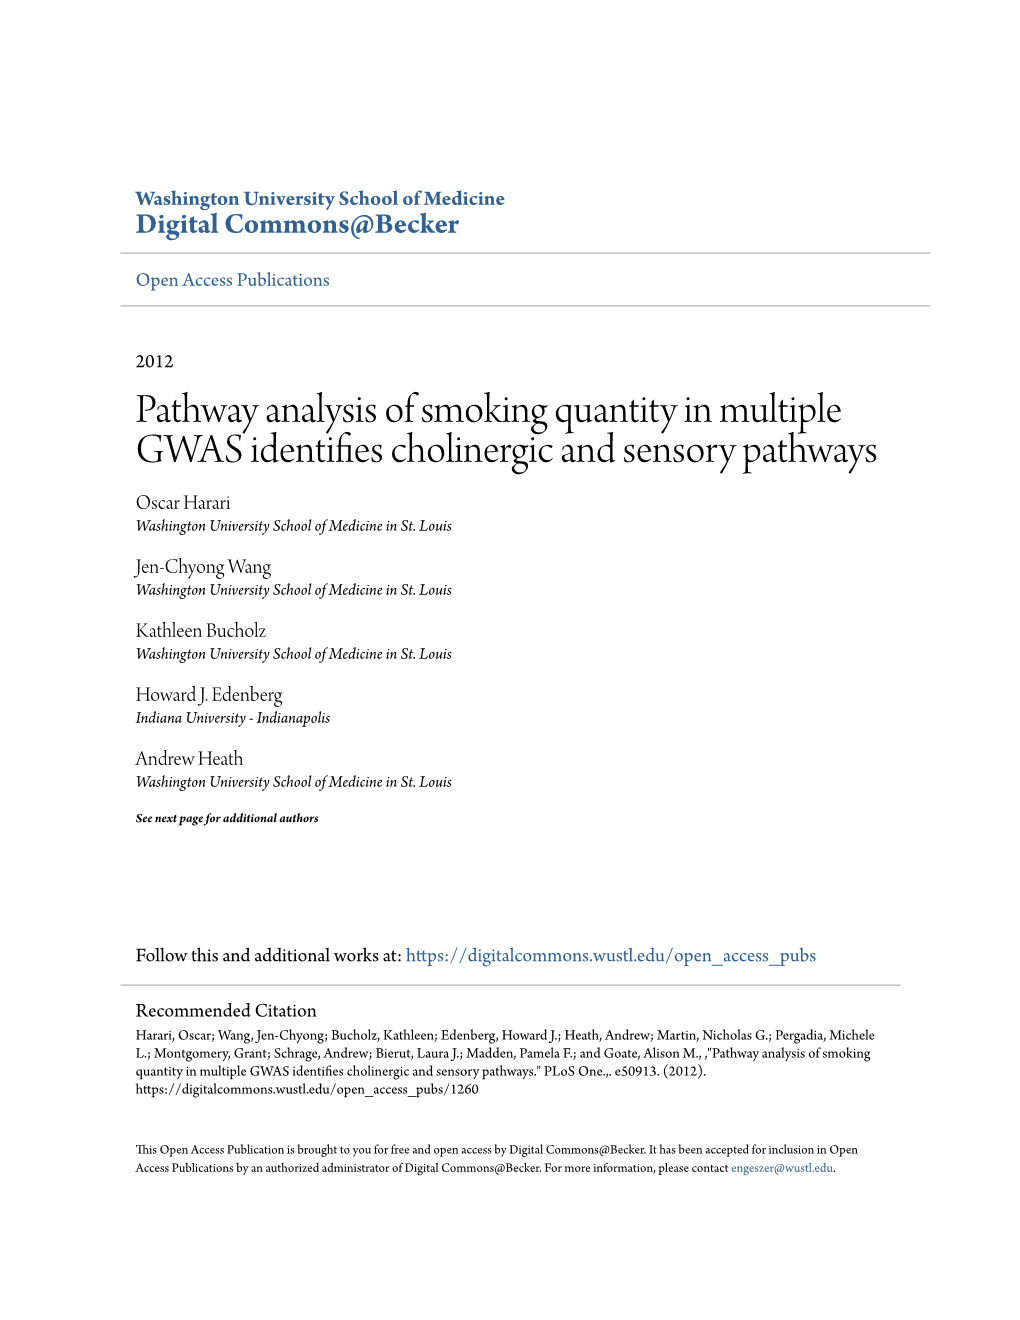 Pathway Analysis of Smoking Quantity in Multiple GWAS Identifies Cholinergic and Sensory Pathways Oscar Harari Washington University School of Medicine in St